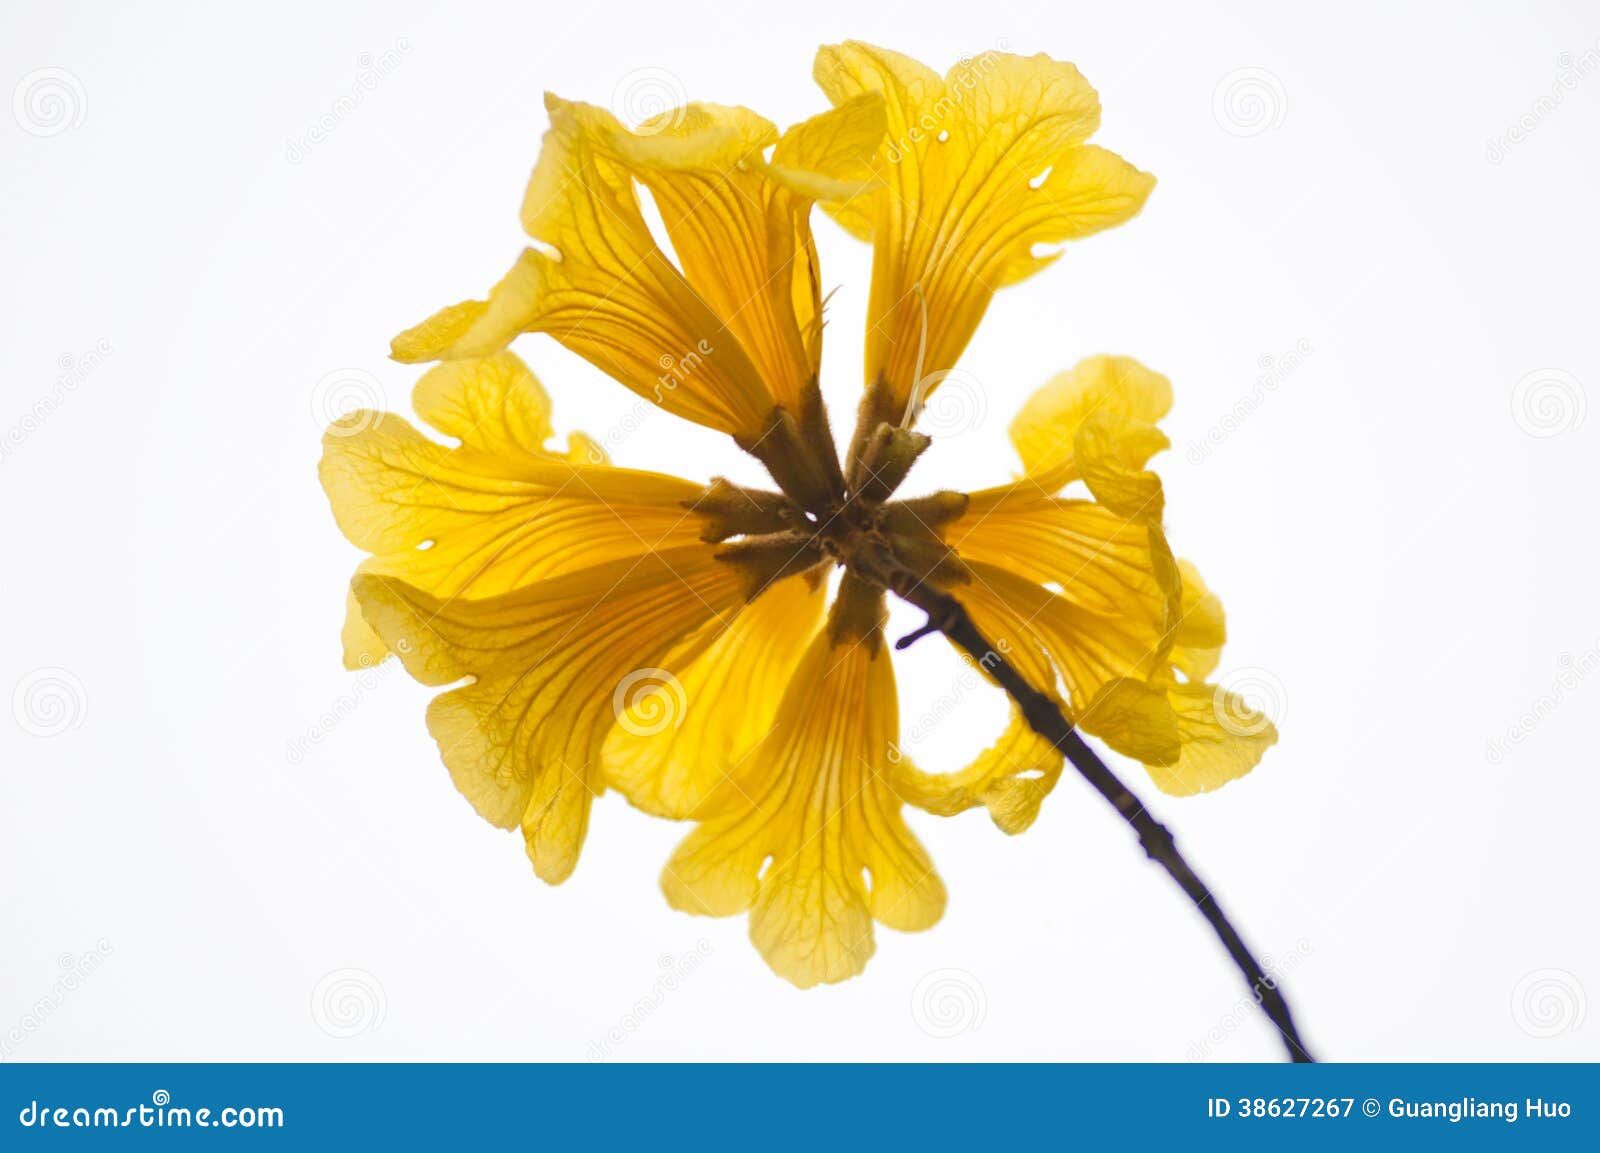 tabebuia chrysantha(jacq. )nichols